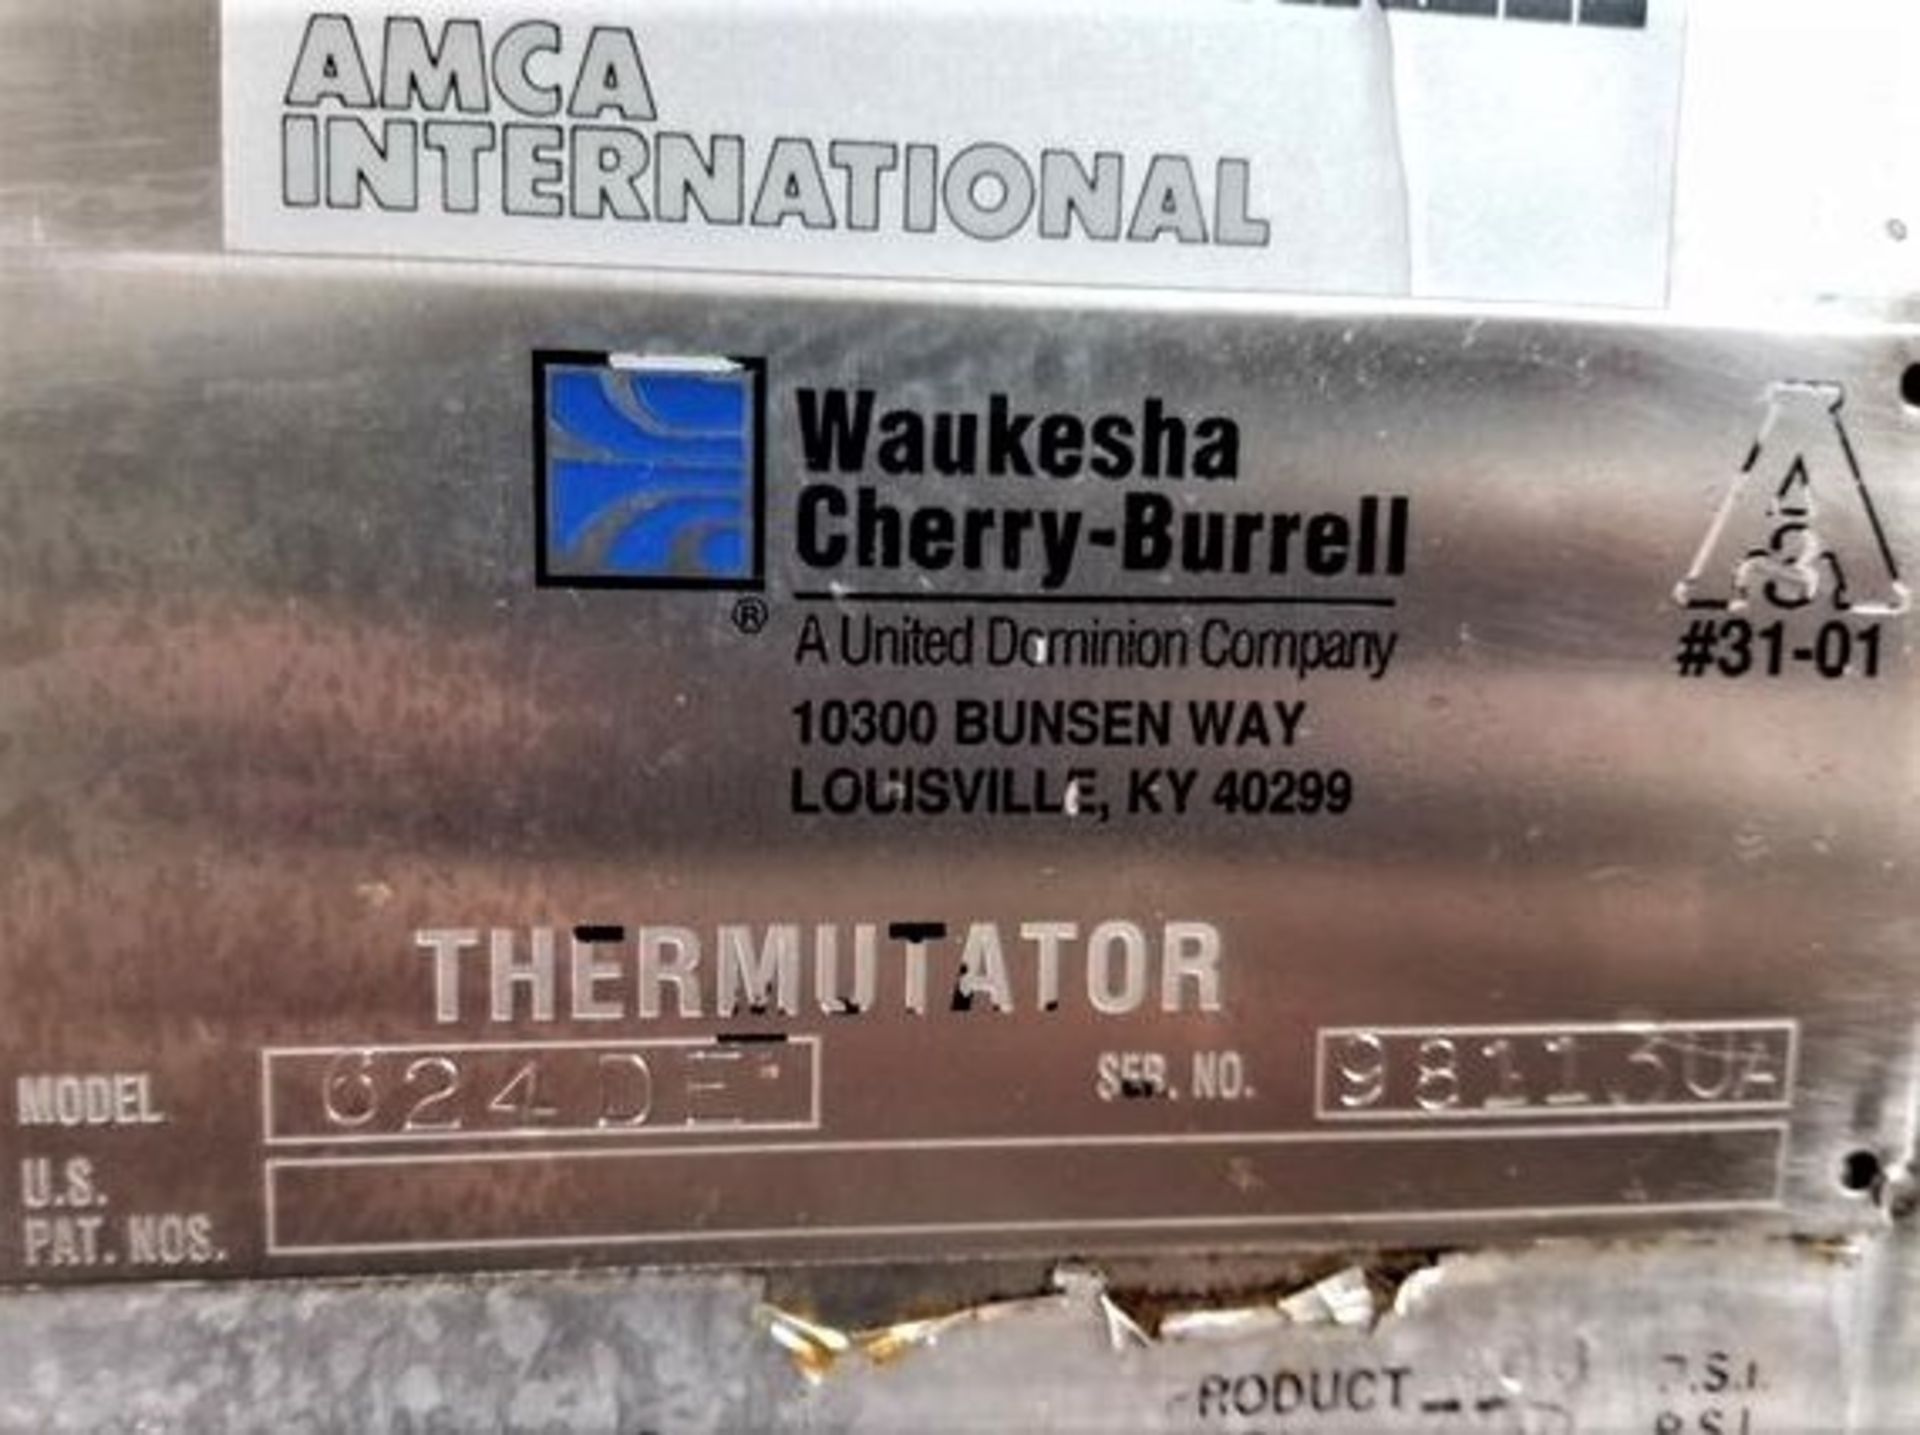 Waukesha Cherry Burrell Thermutator, Model 624DE, Serial # 98113UA, Product 400 PSI, Media 250 - Image 3 of 19